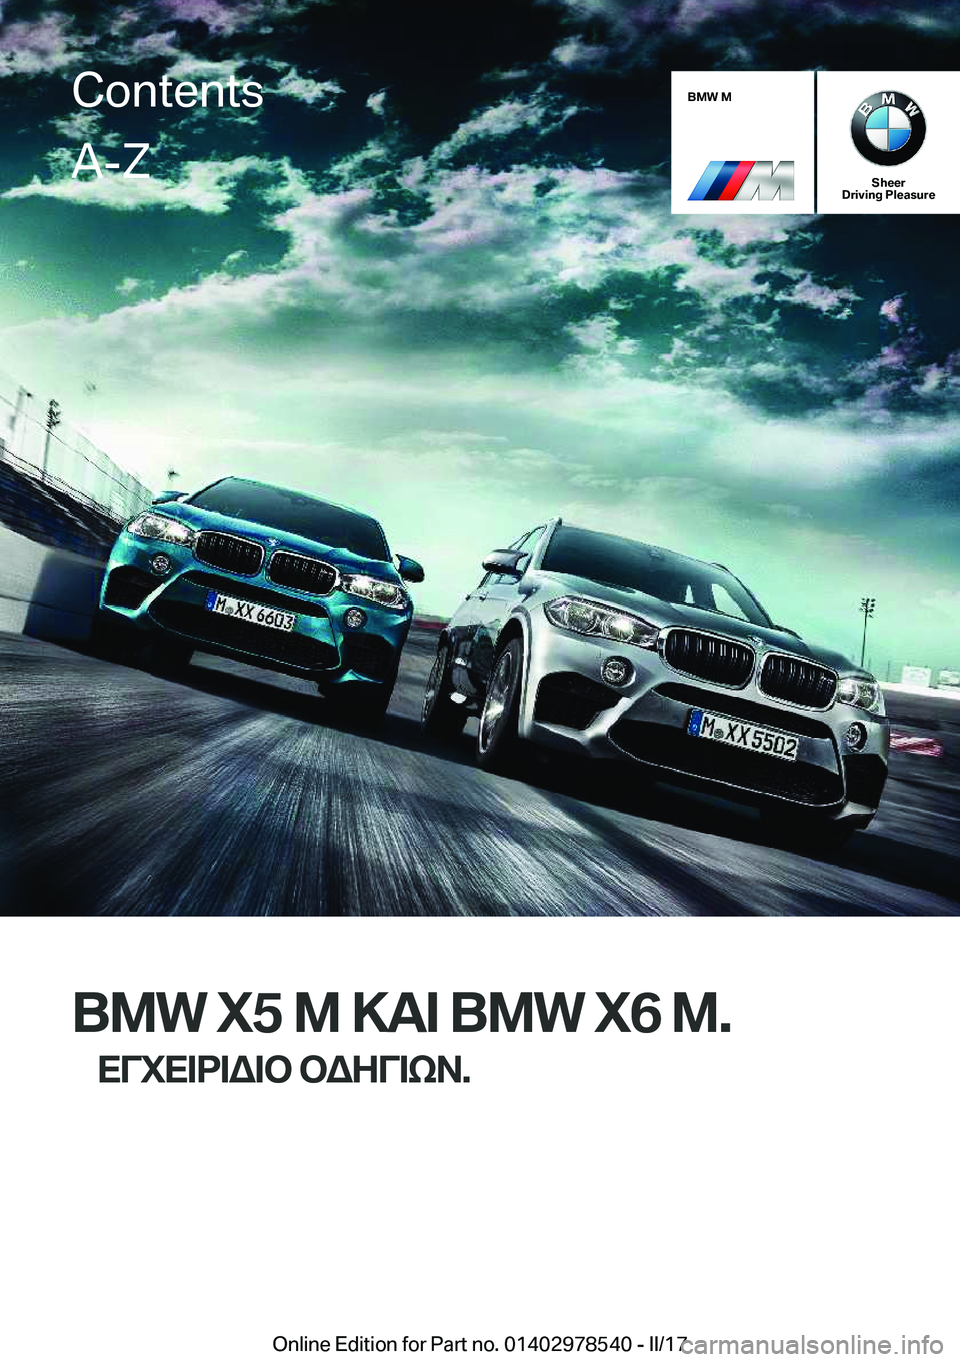 BMW X6 M 2017  ΟΔΗΓΌΣ ΧΡΉΣΗΣ (in Greek) �B�M�W��M
�S�h�e�e�r
�D�r�i�v�i�n�g��P�l�e�a�s�u�r�e
�B�M�W��X�5��M�>T=��B�M�W��X�6��M�.
XViX=d=W=b�bW;V=kA�.
�C�o�n�t�e�n�t�s�A�-�Z
�O�n�l�i�n�e� �E�d�i�t�i�o�n� �f�o�r� 